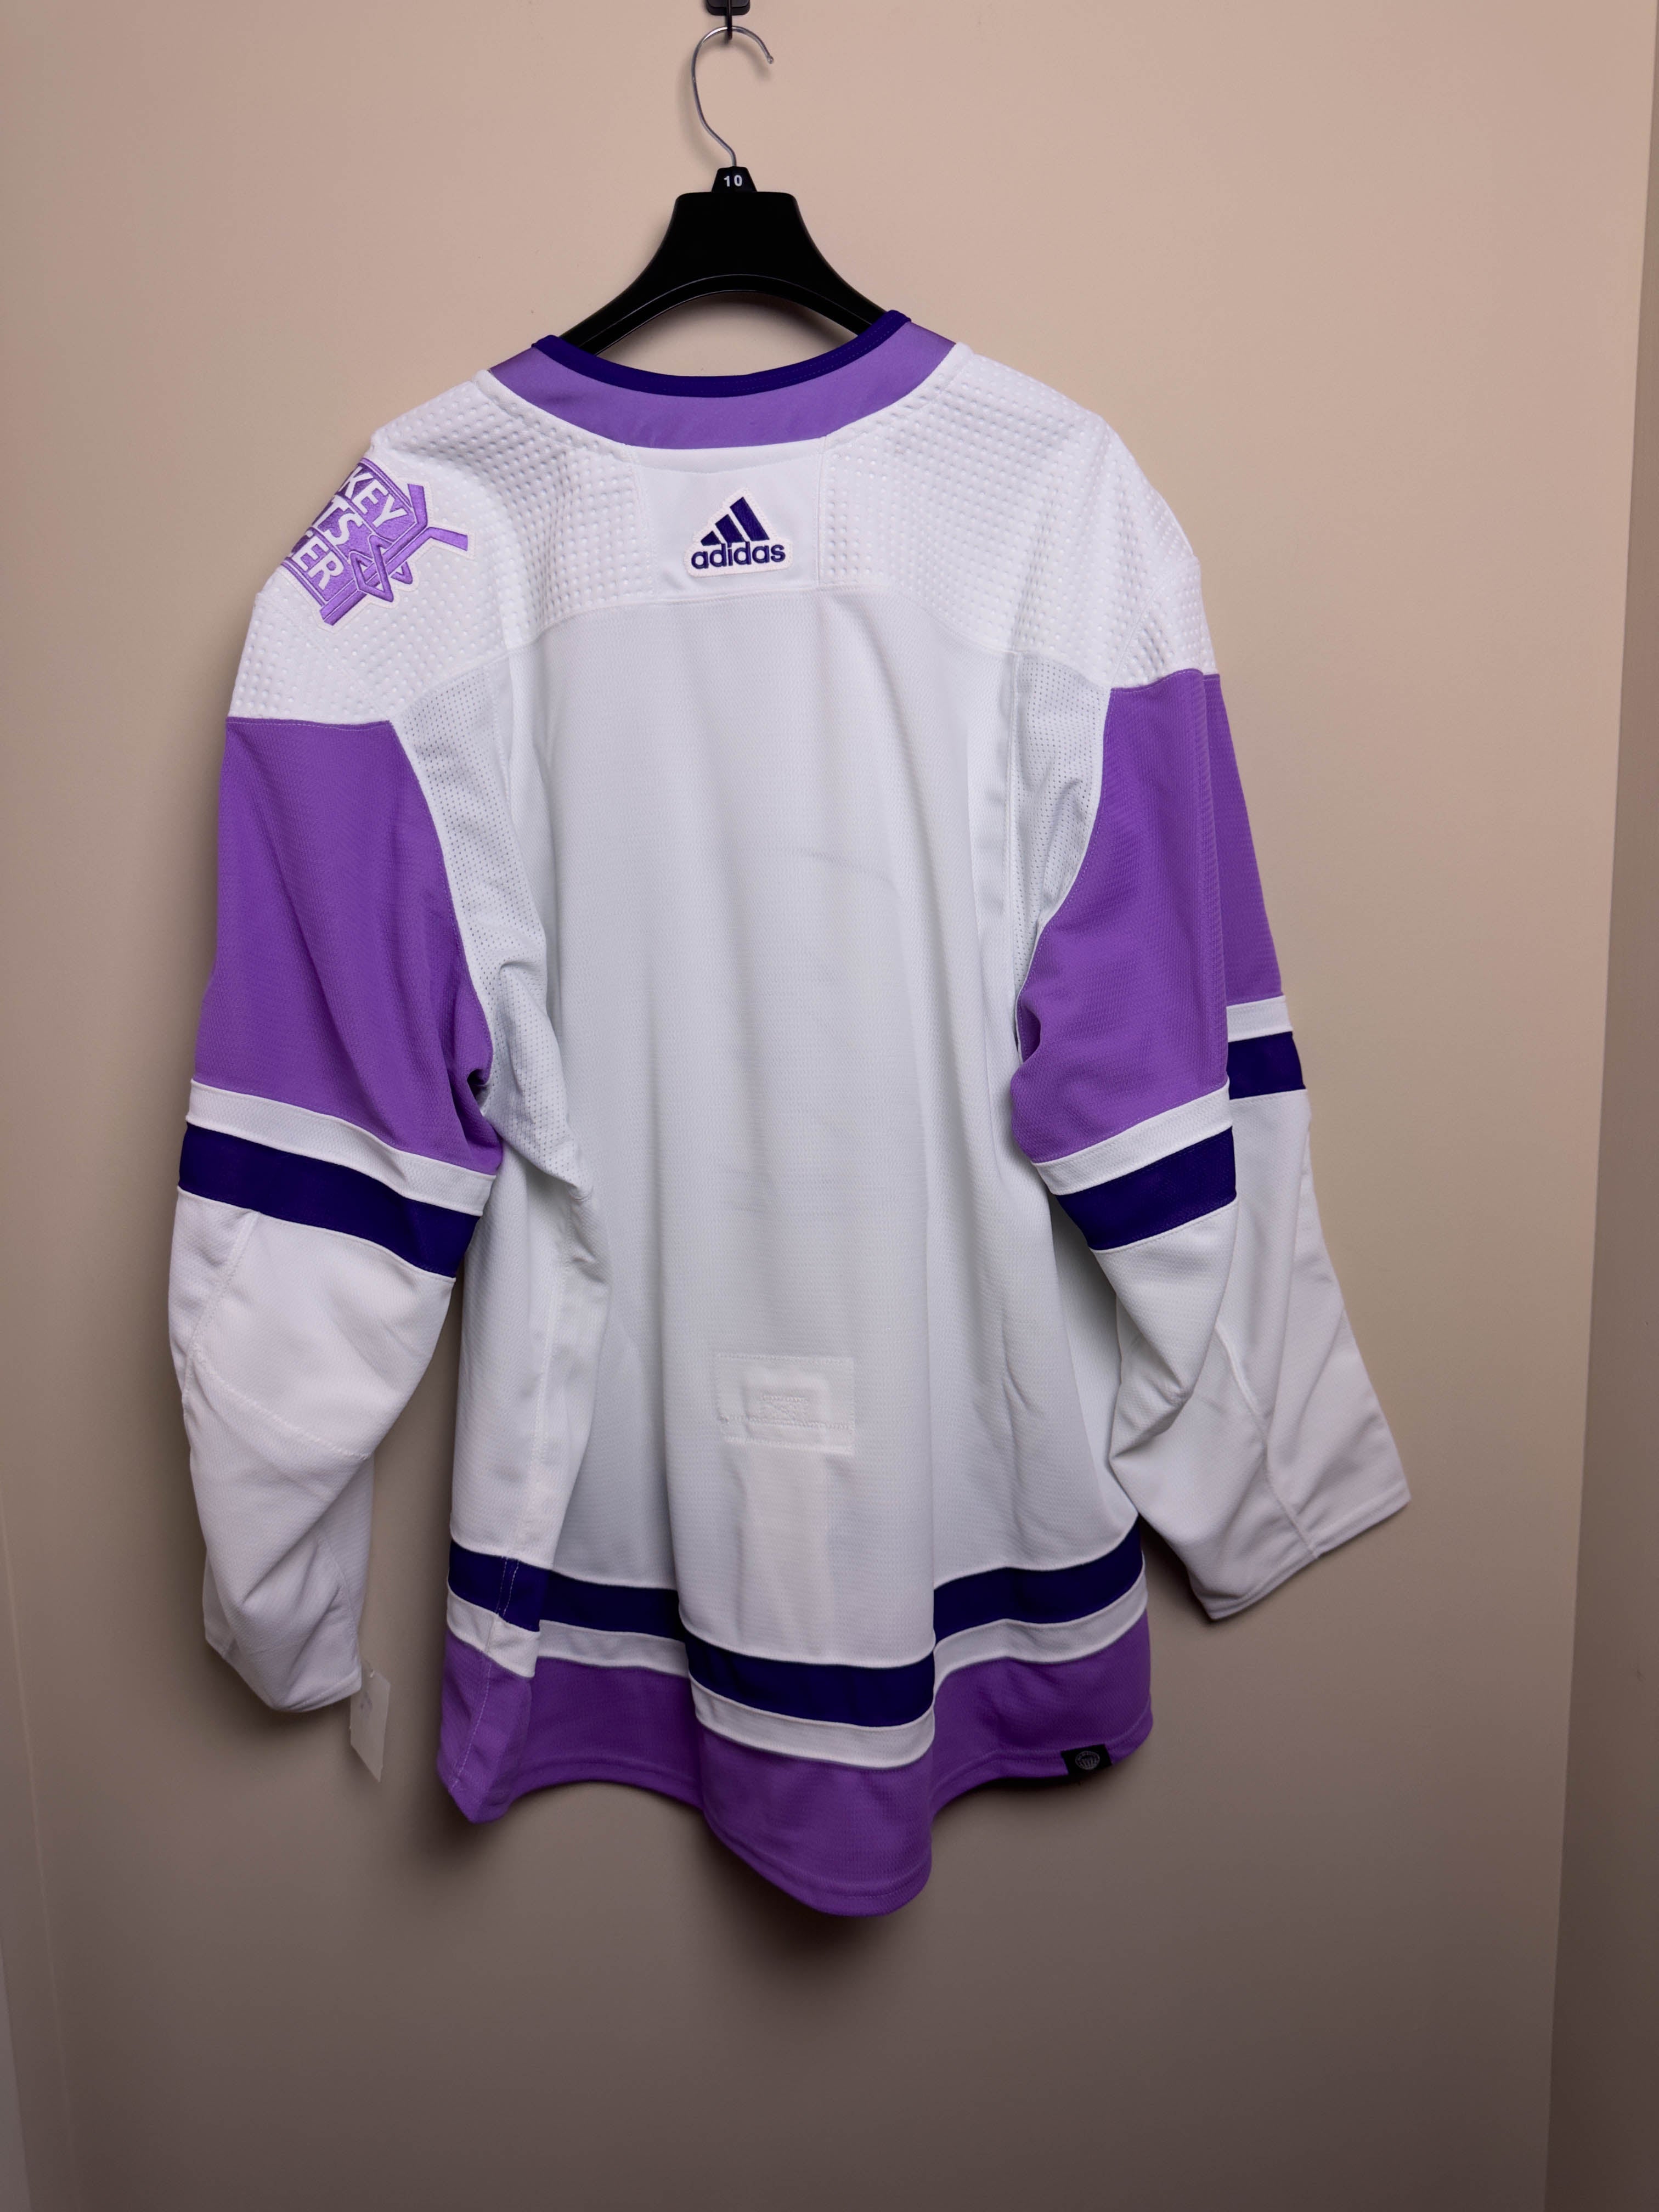 Hockey Fights Cancer Tampa Bay Lightning Purple 255J Adidas NHL